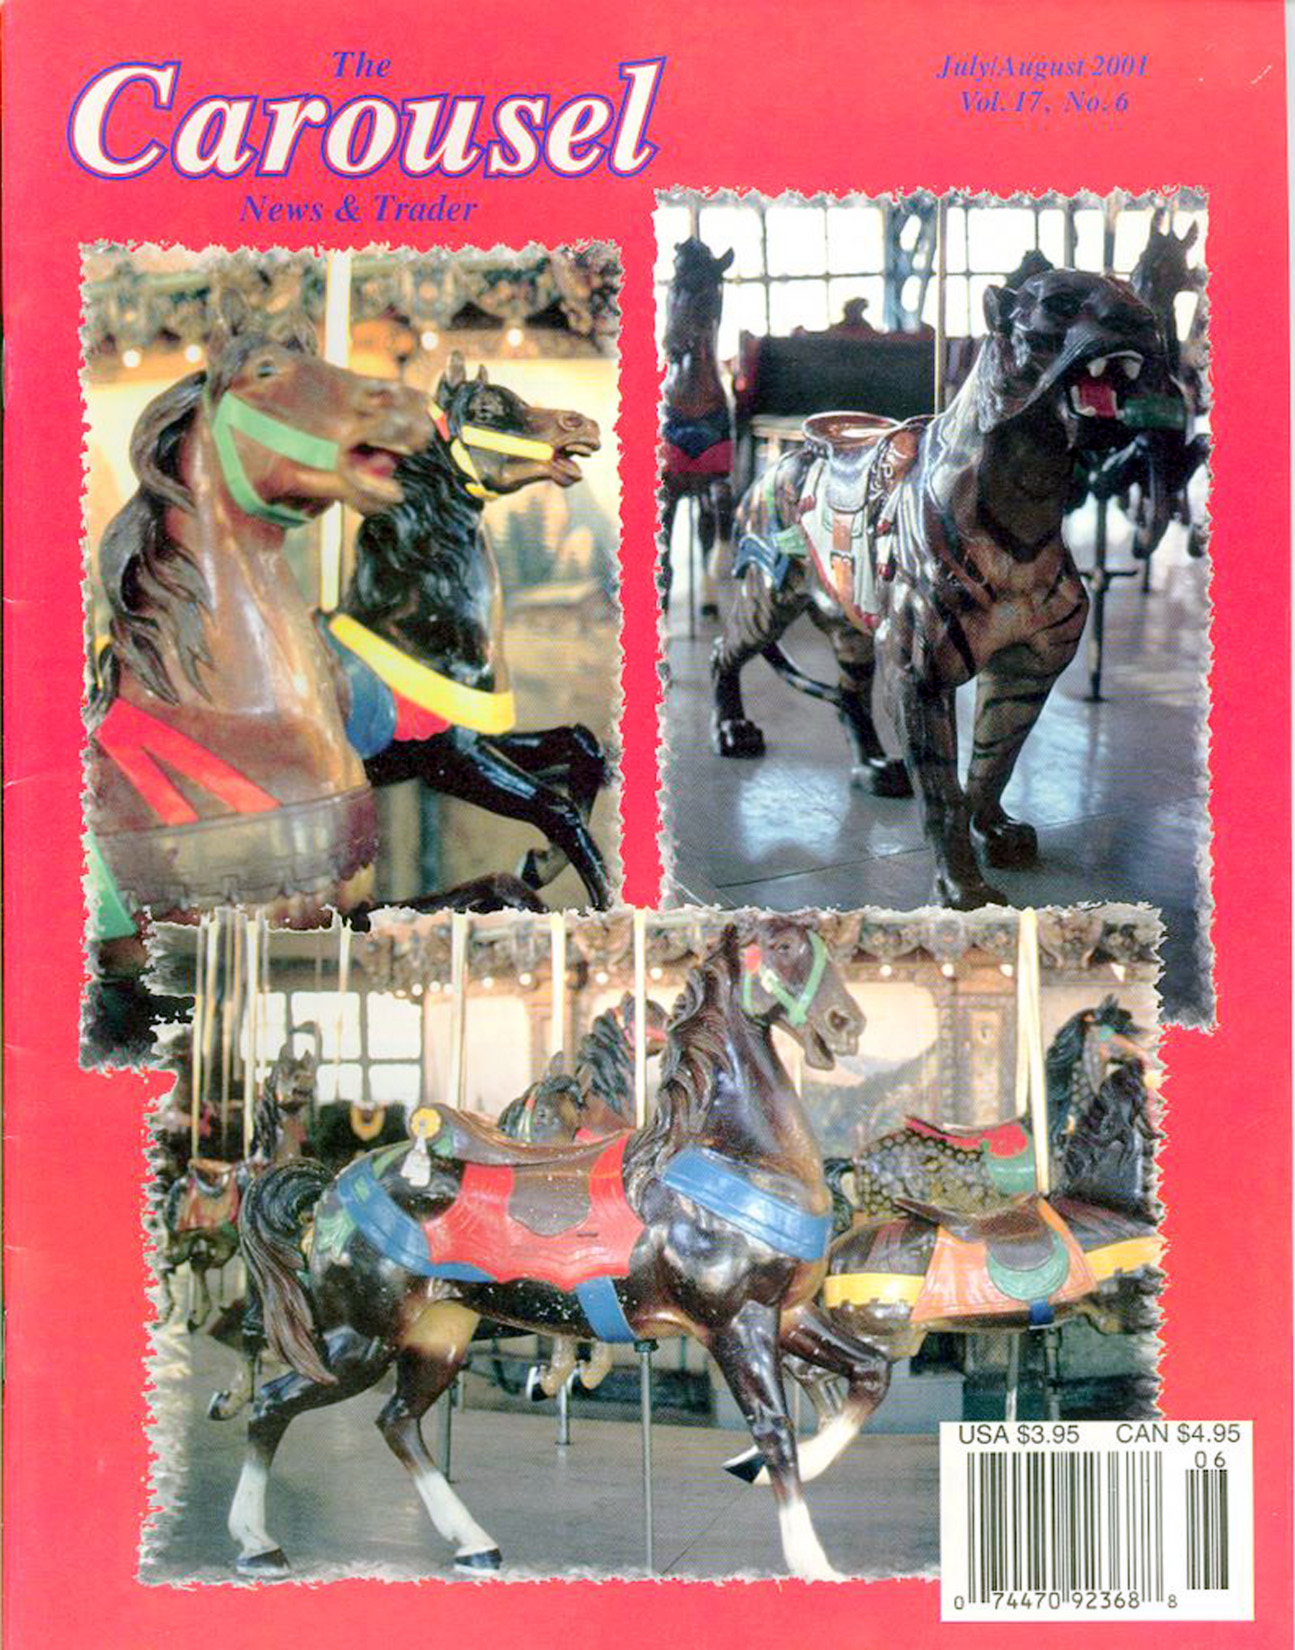 cnt_07_08_2001-Lancaster-PA-Dentzel-menagerie-carousel